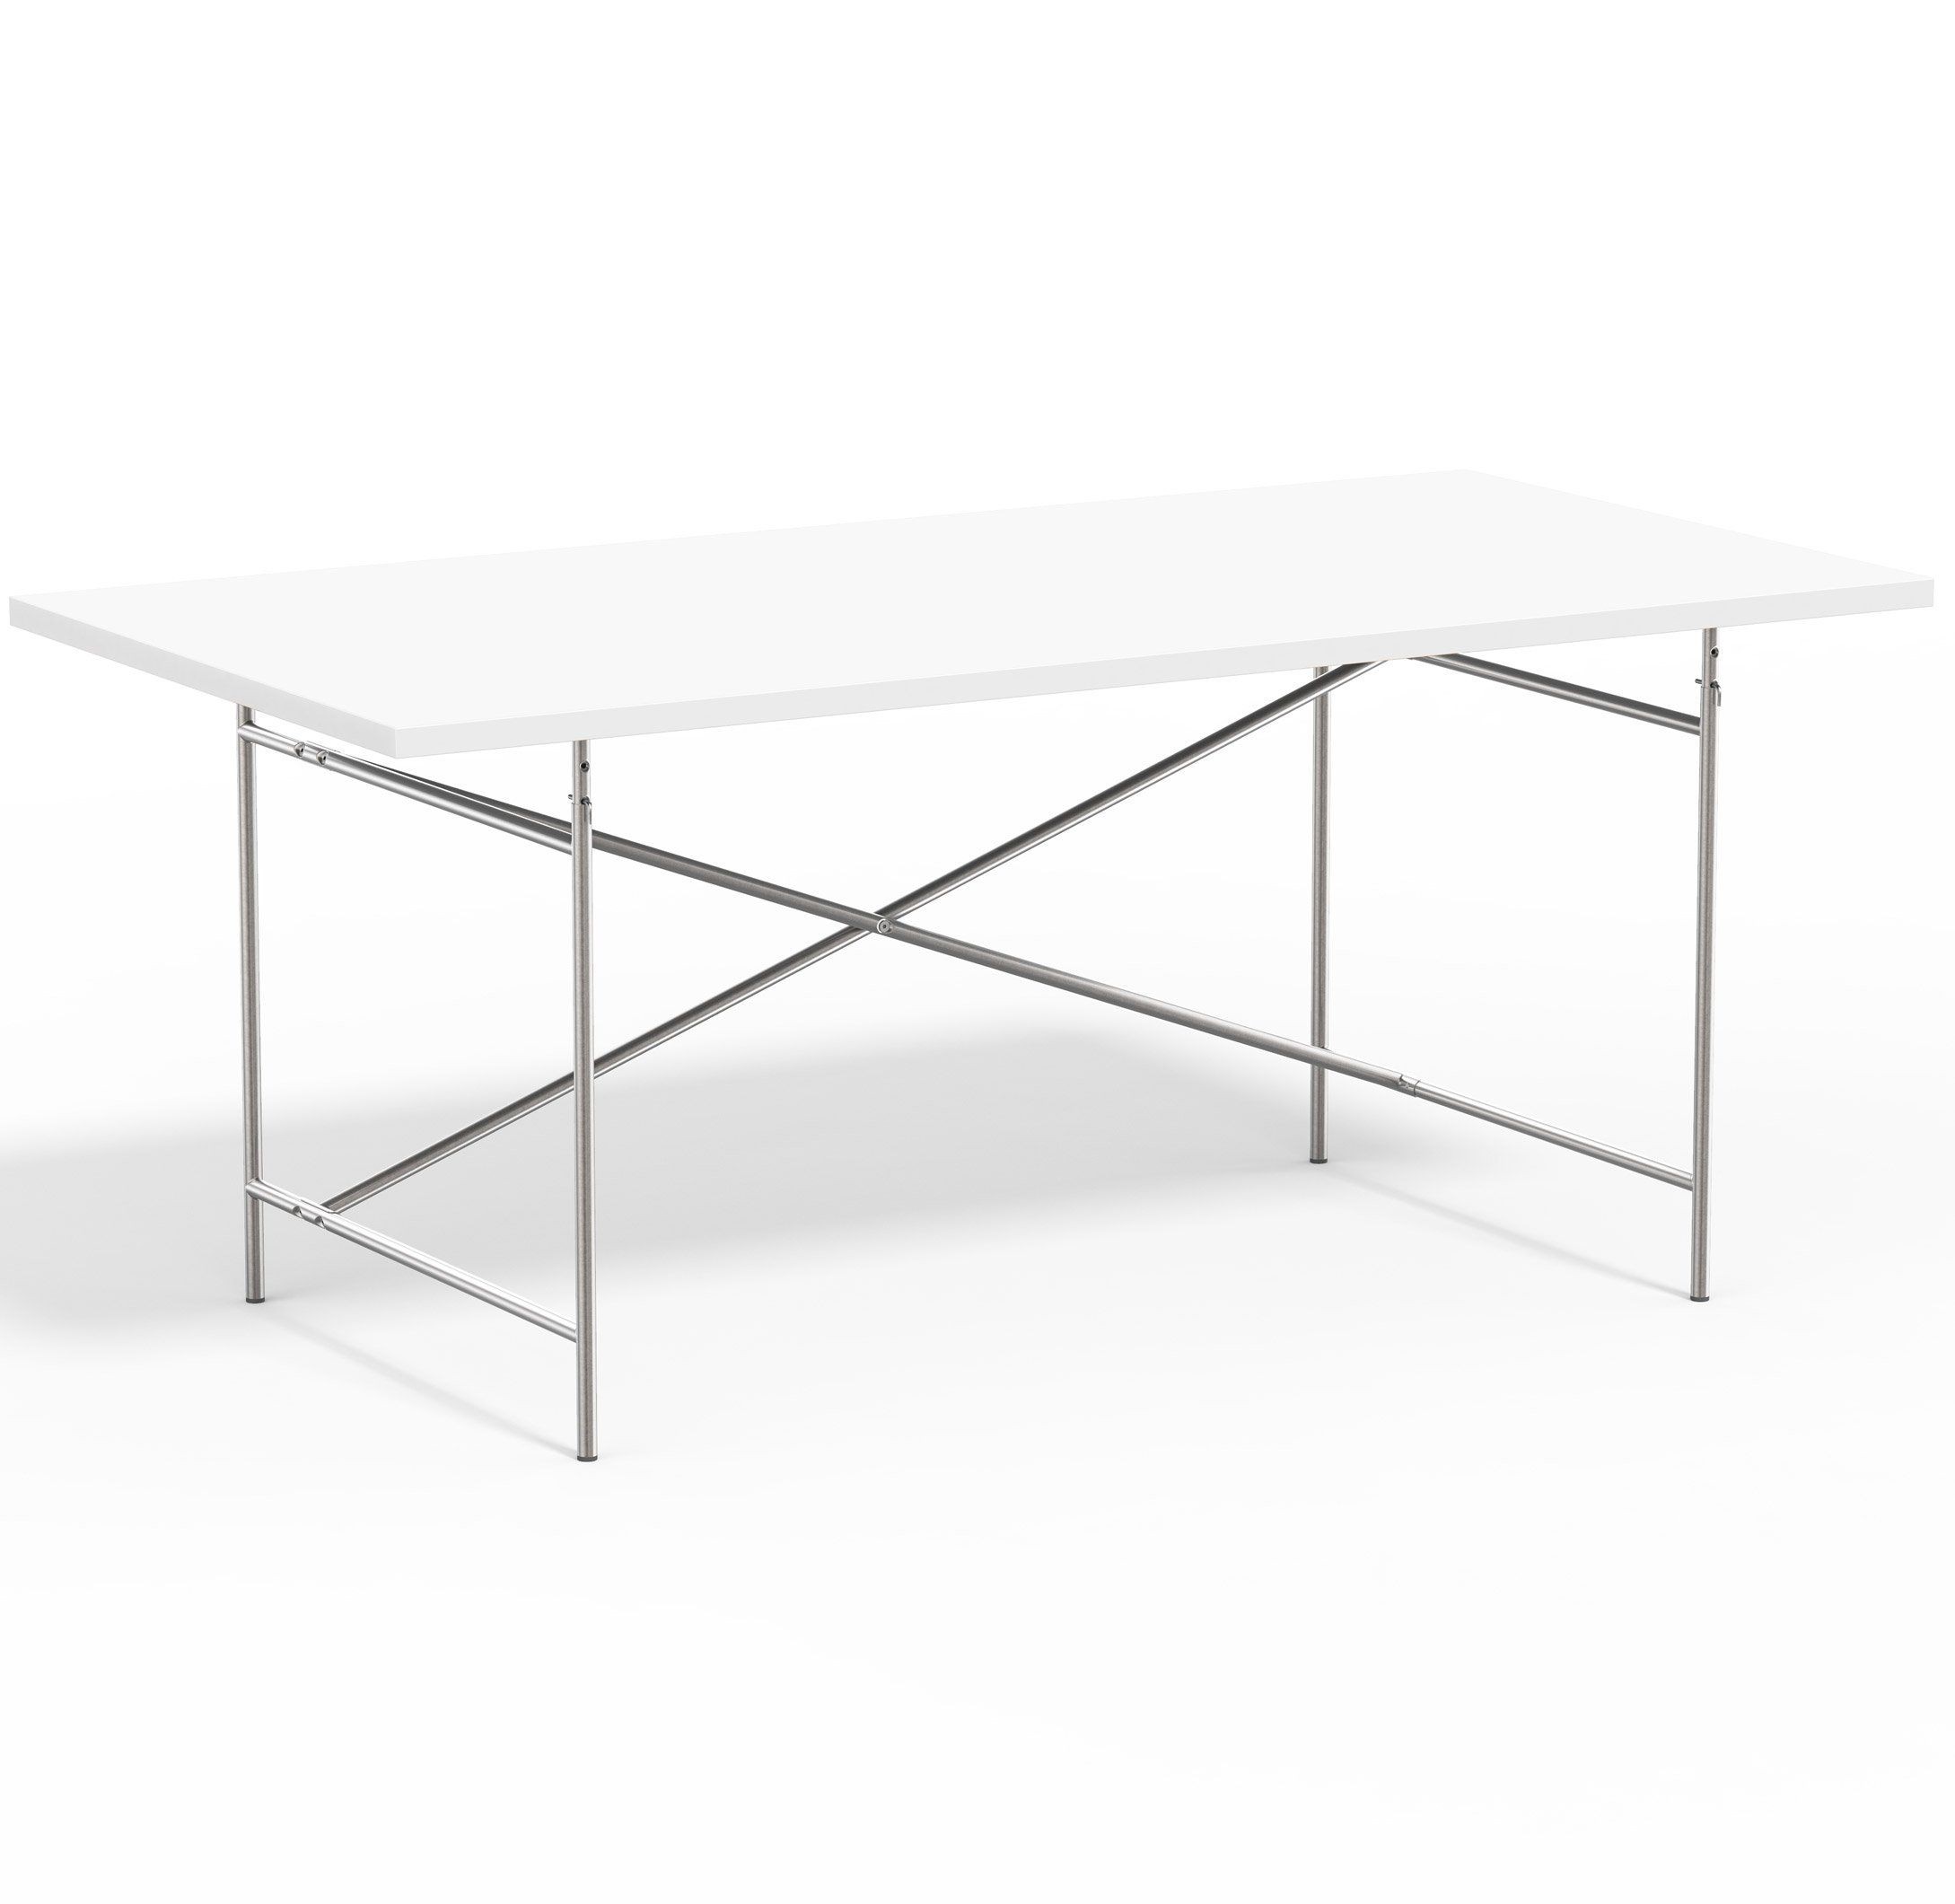 Lampert Eiermann Tischgestell 2 - 135 x 78 cm - Edelstahl - Melmain weiß full--19